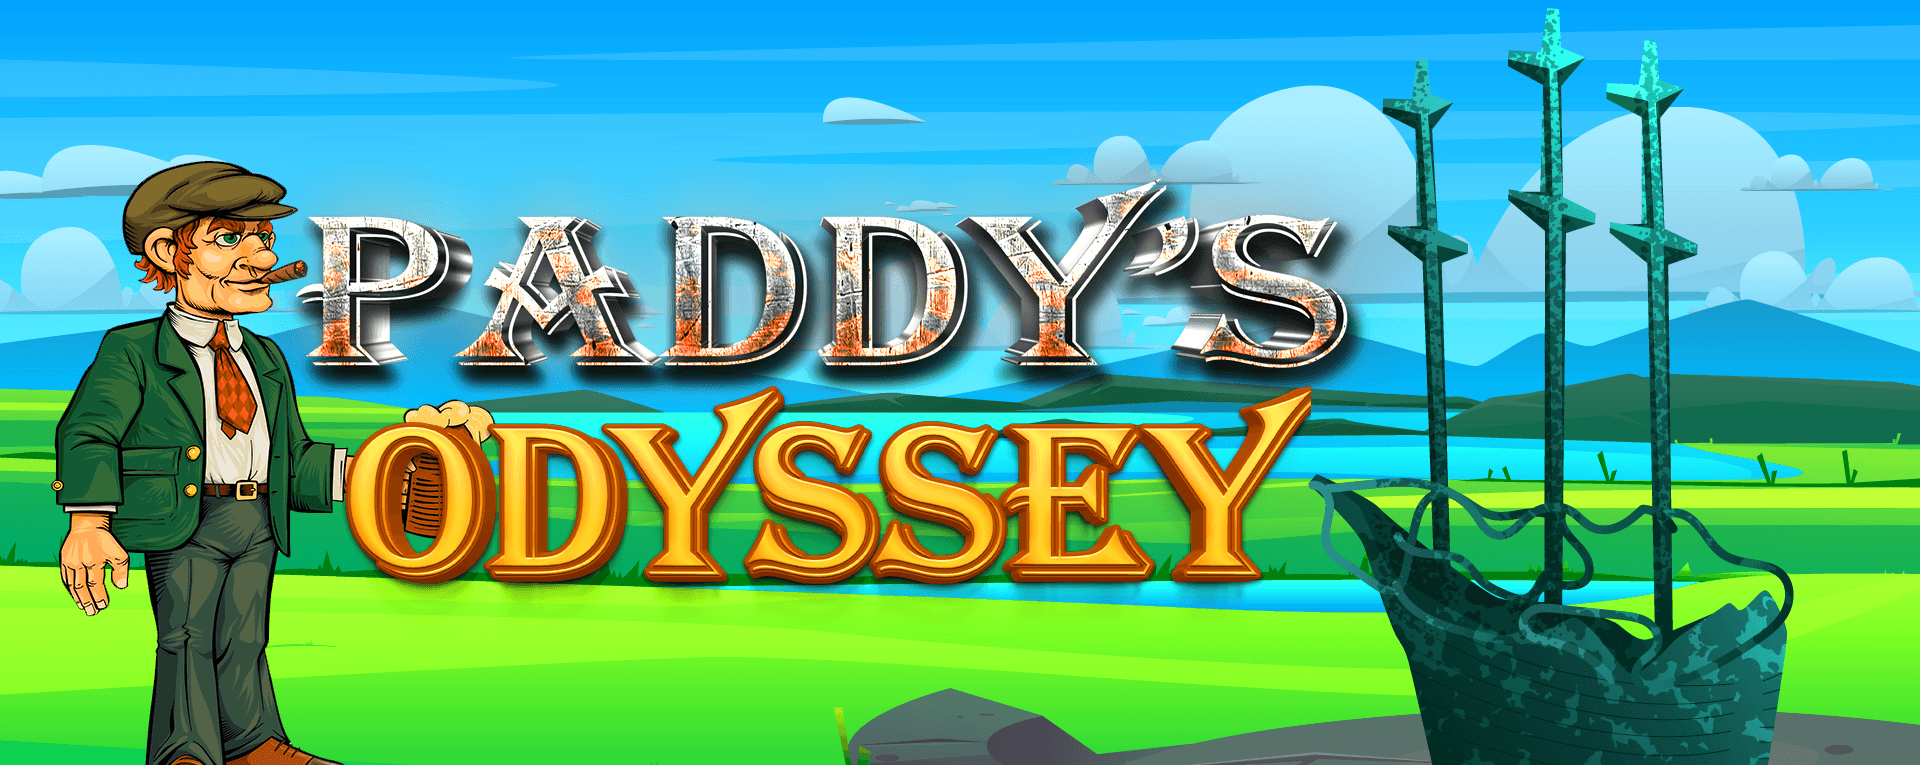 Paddys_Odyssey バナー